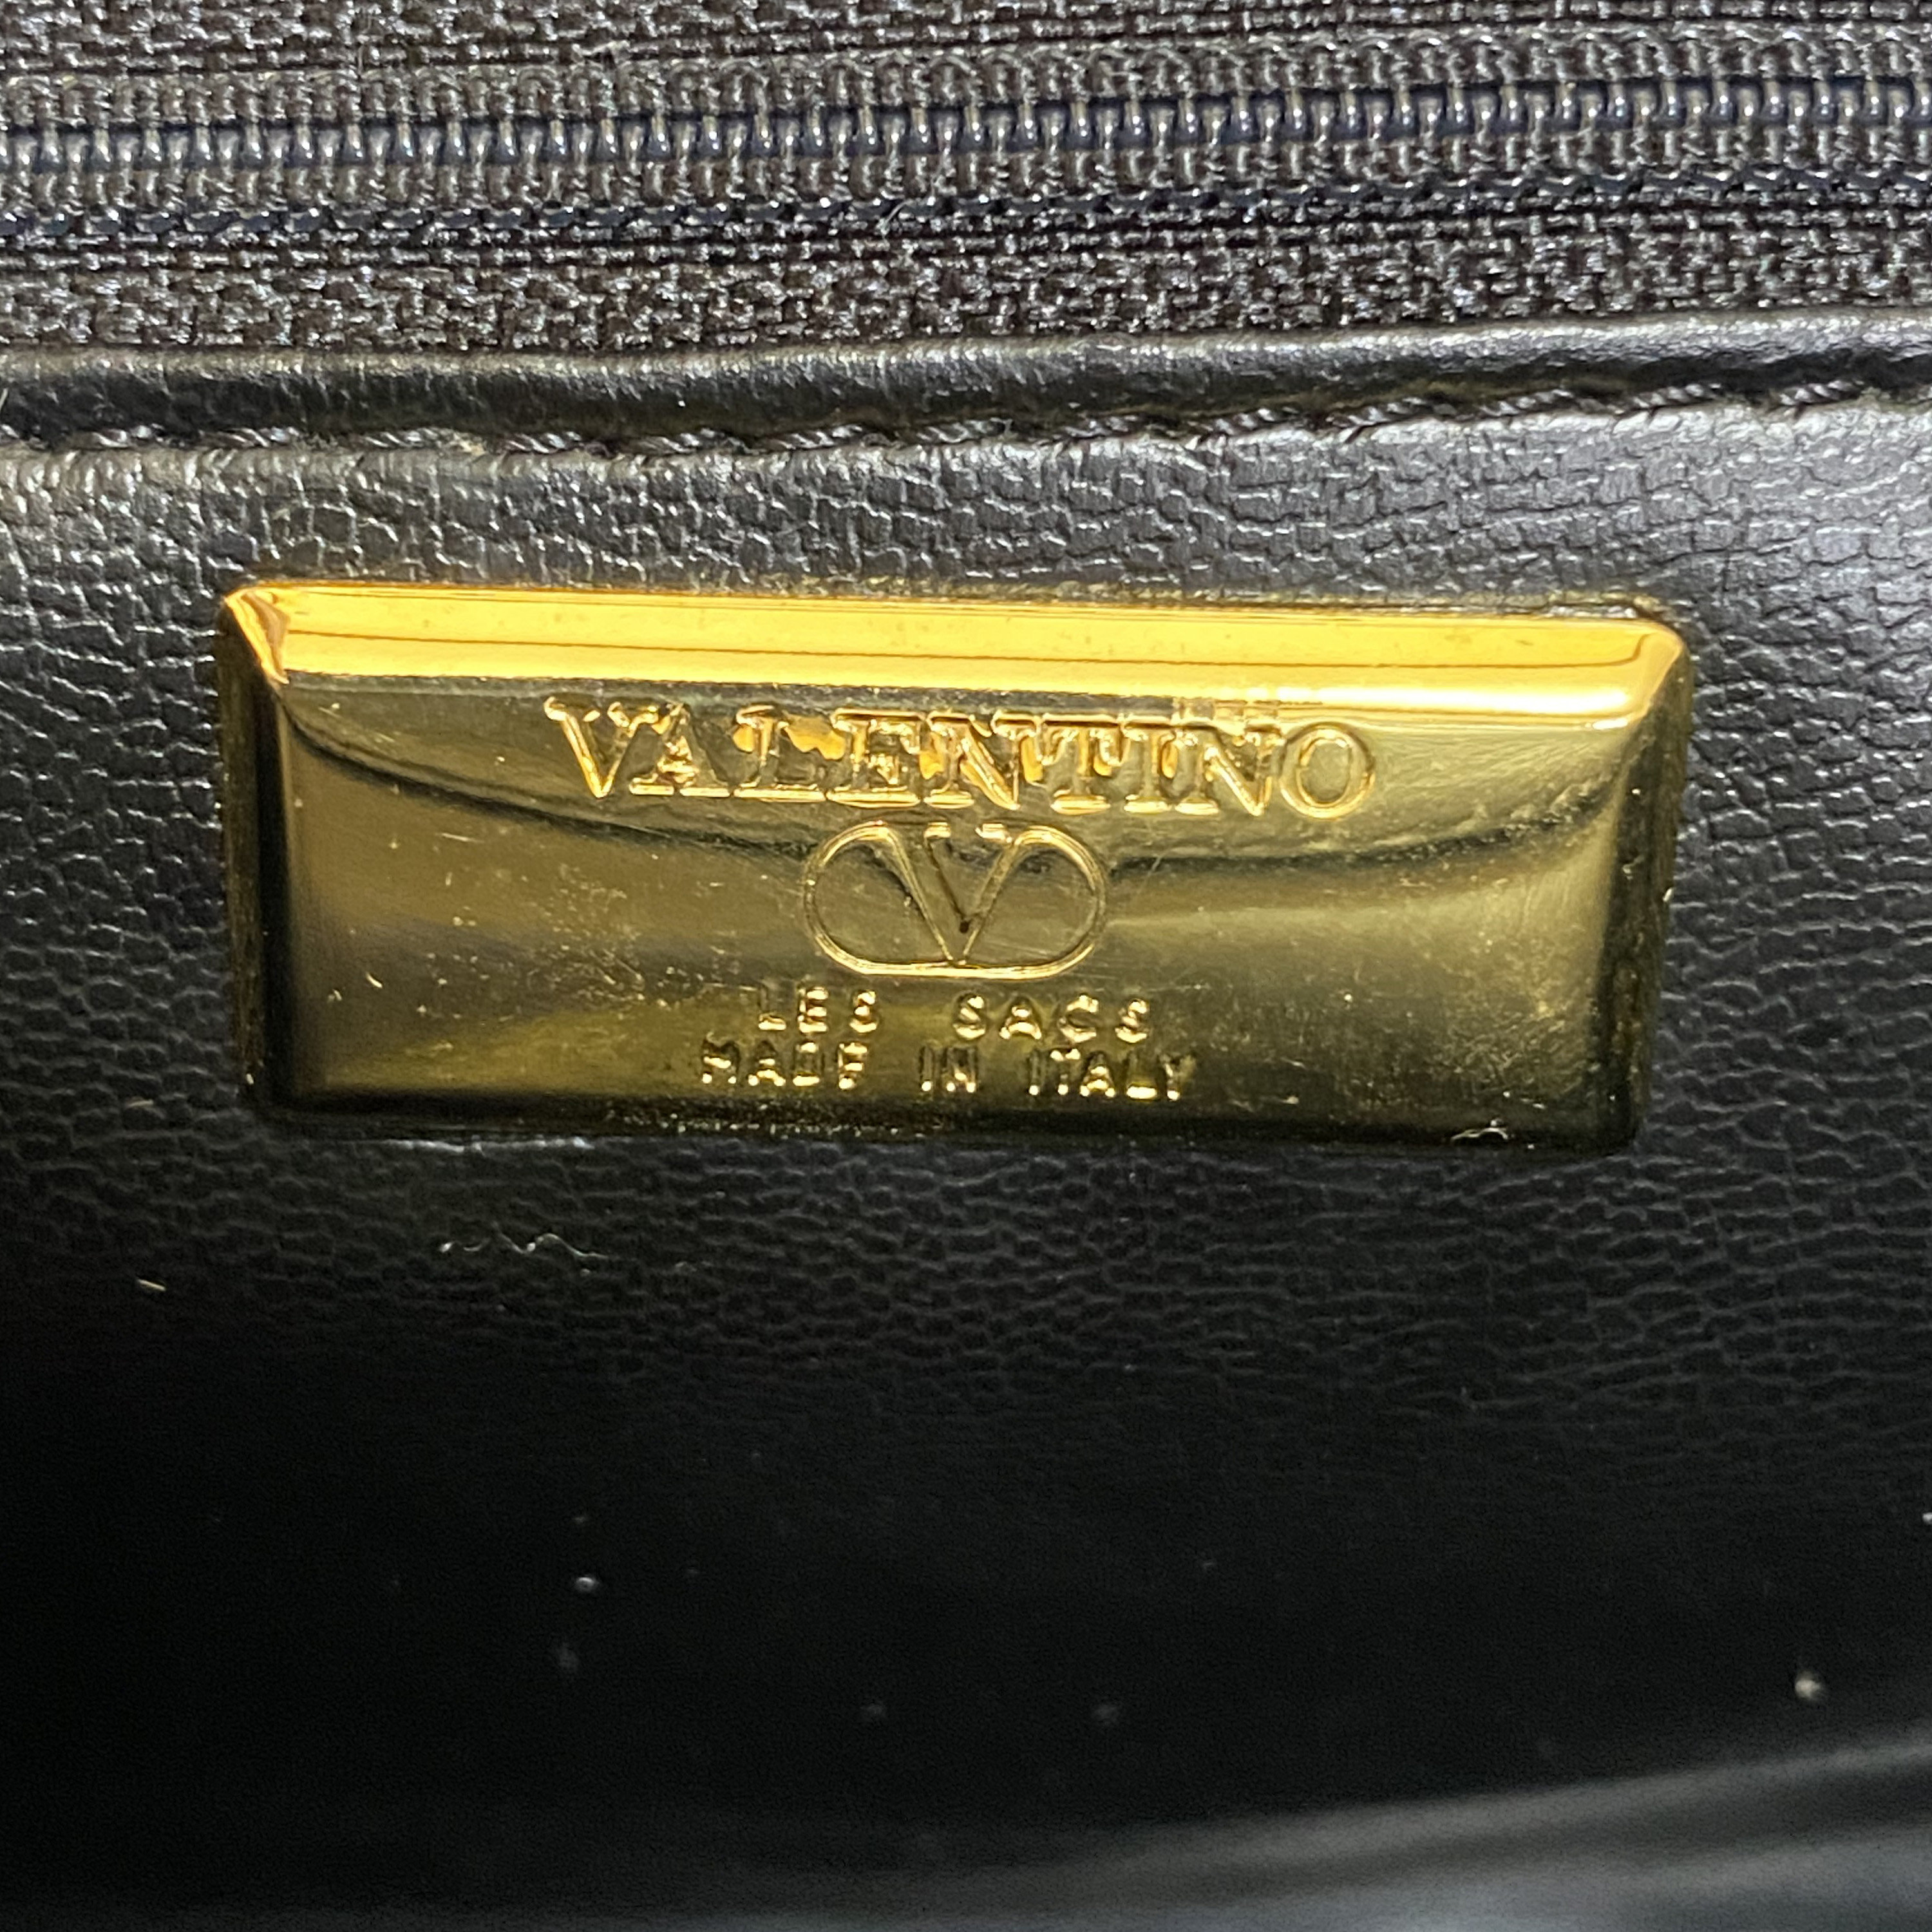 Valentino Garavani - Authenticated VRing Handbag - Leather Black Plain for Women, Never Worn